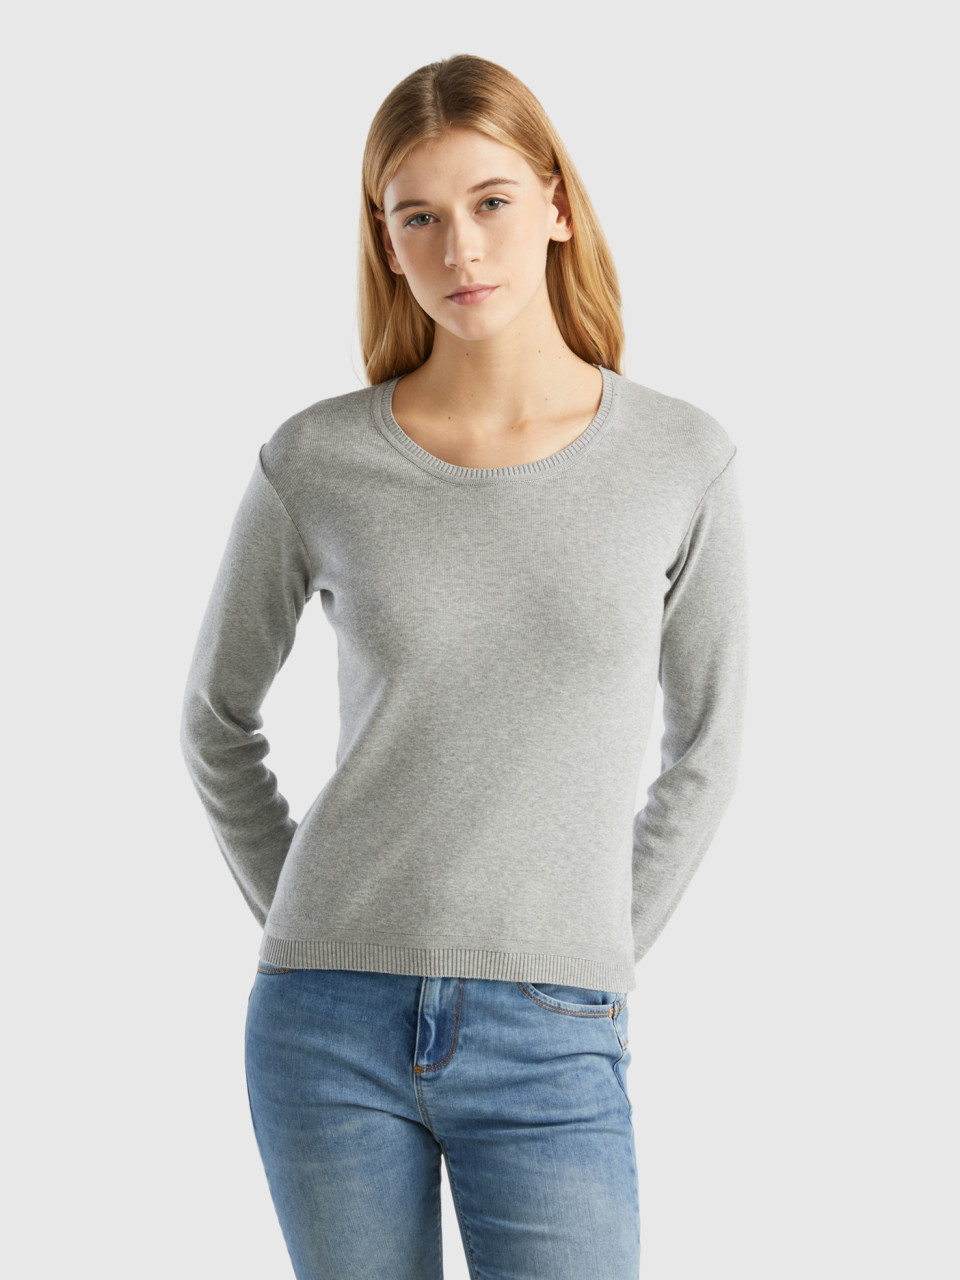 Benetton Online exclusive, Crew Neck Sweater In Pure Cotton, Light Gray, Women